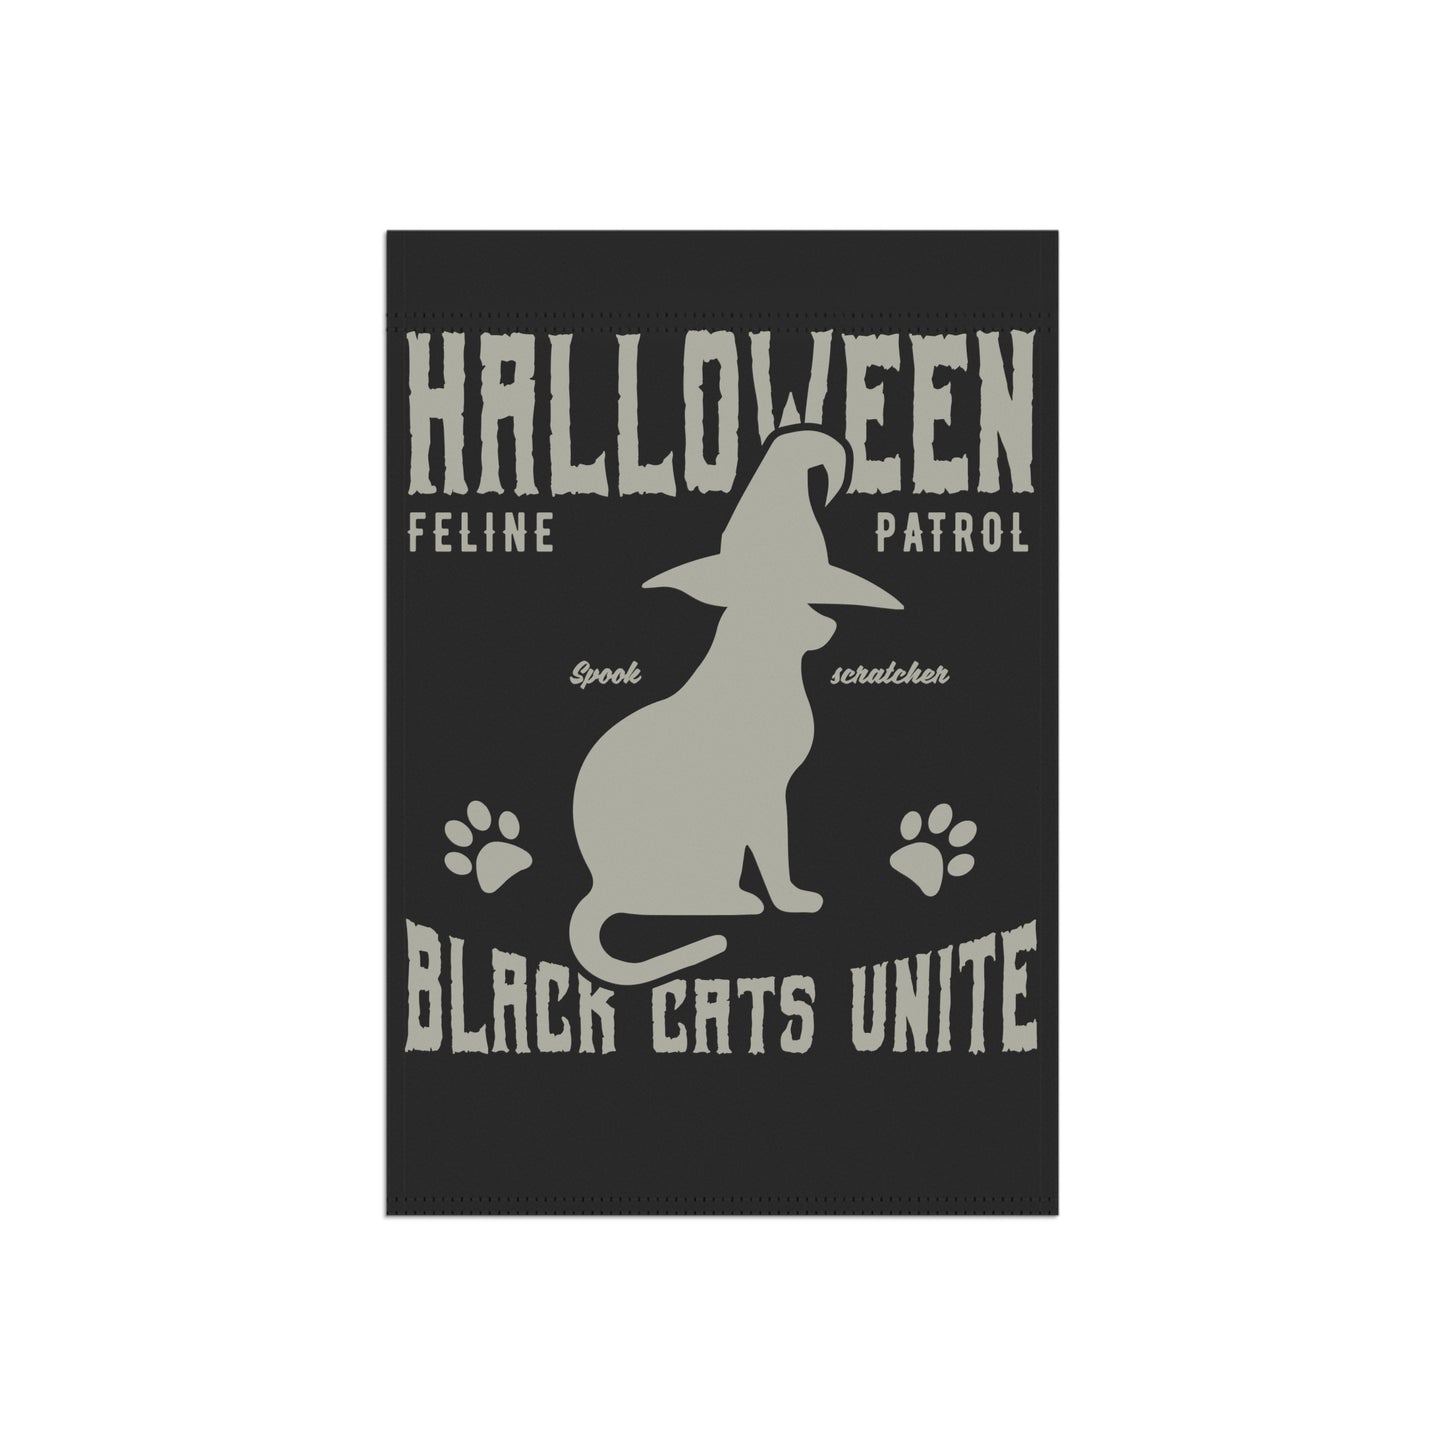 Halloween Black Cats Unit Garden & House Banner